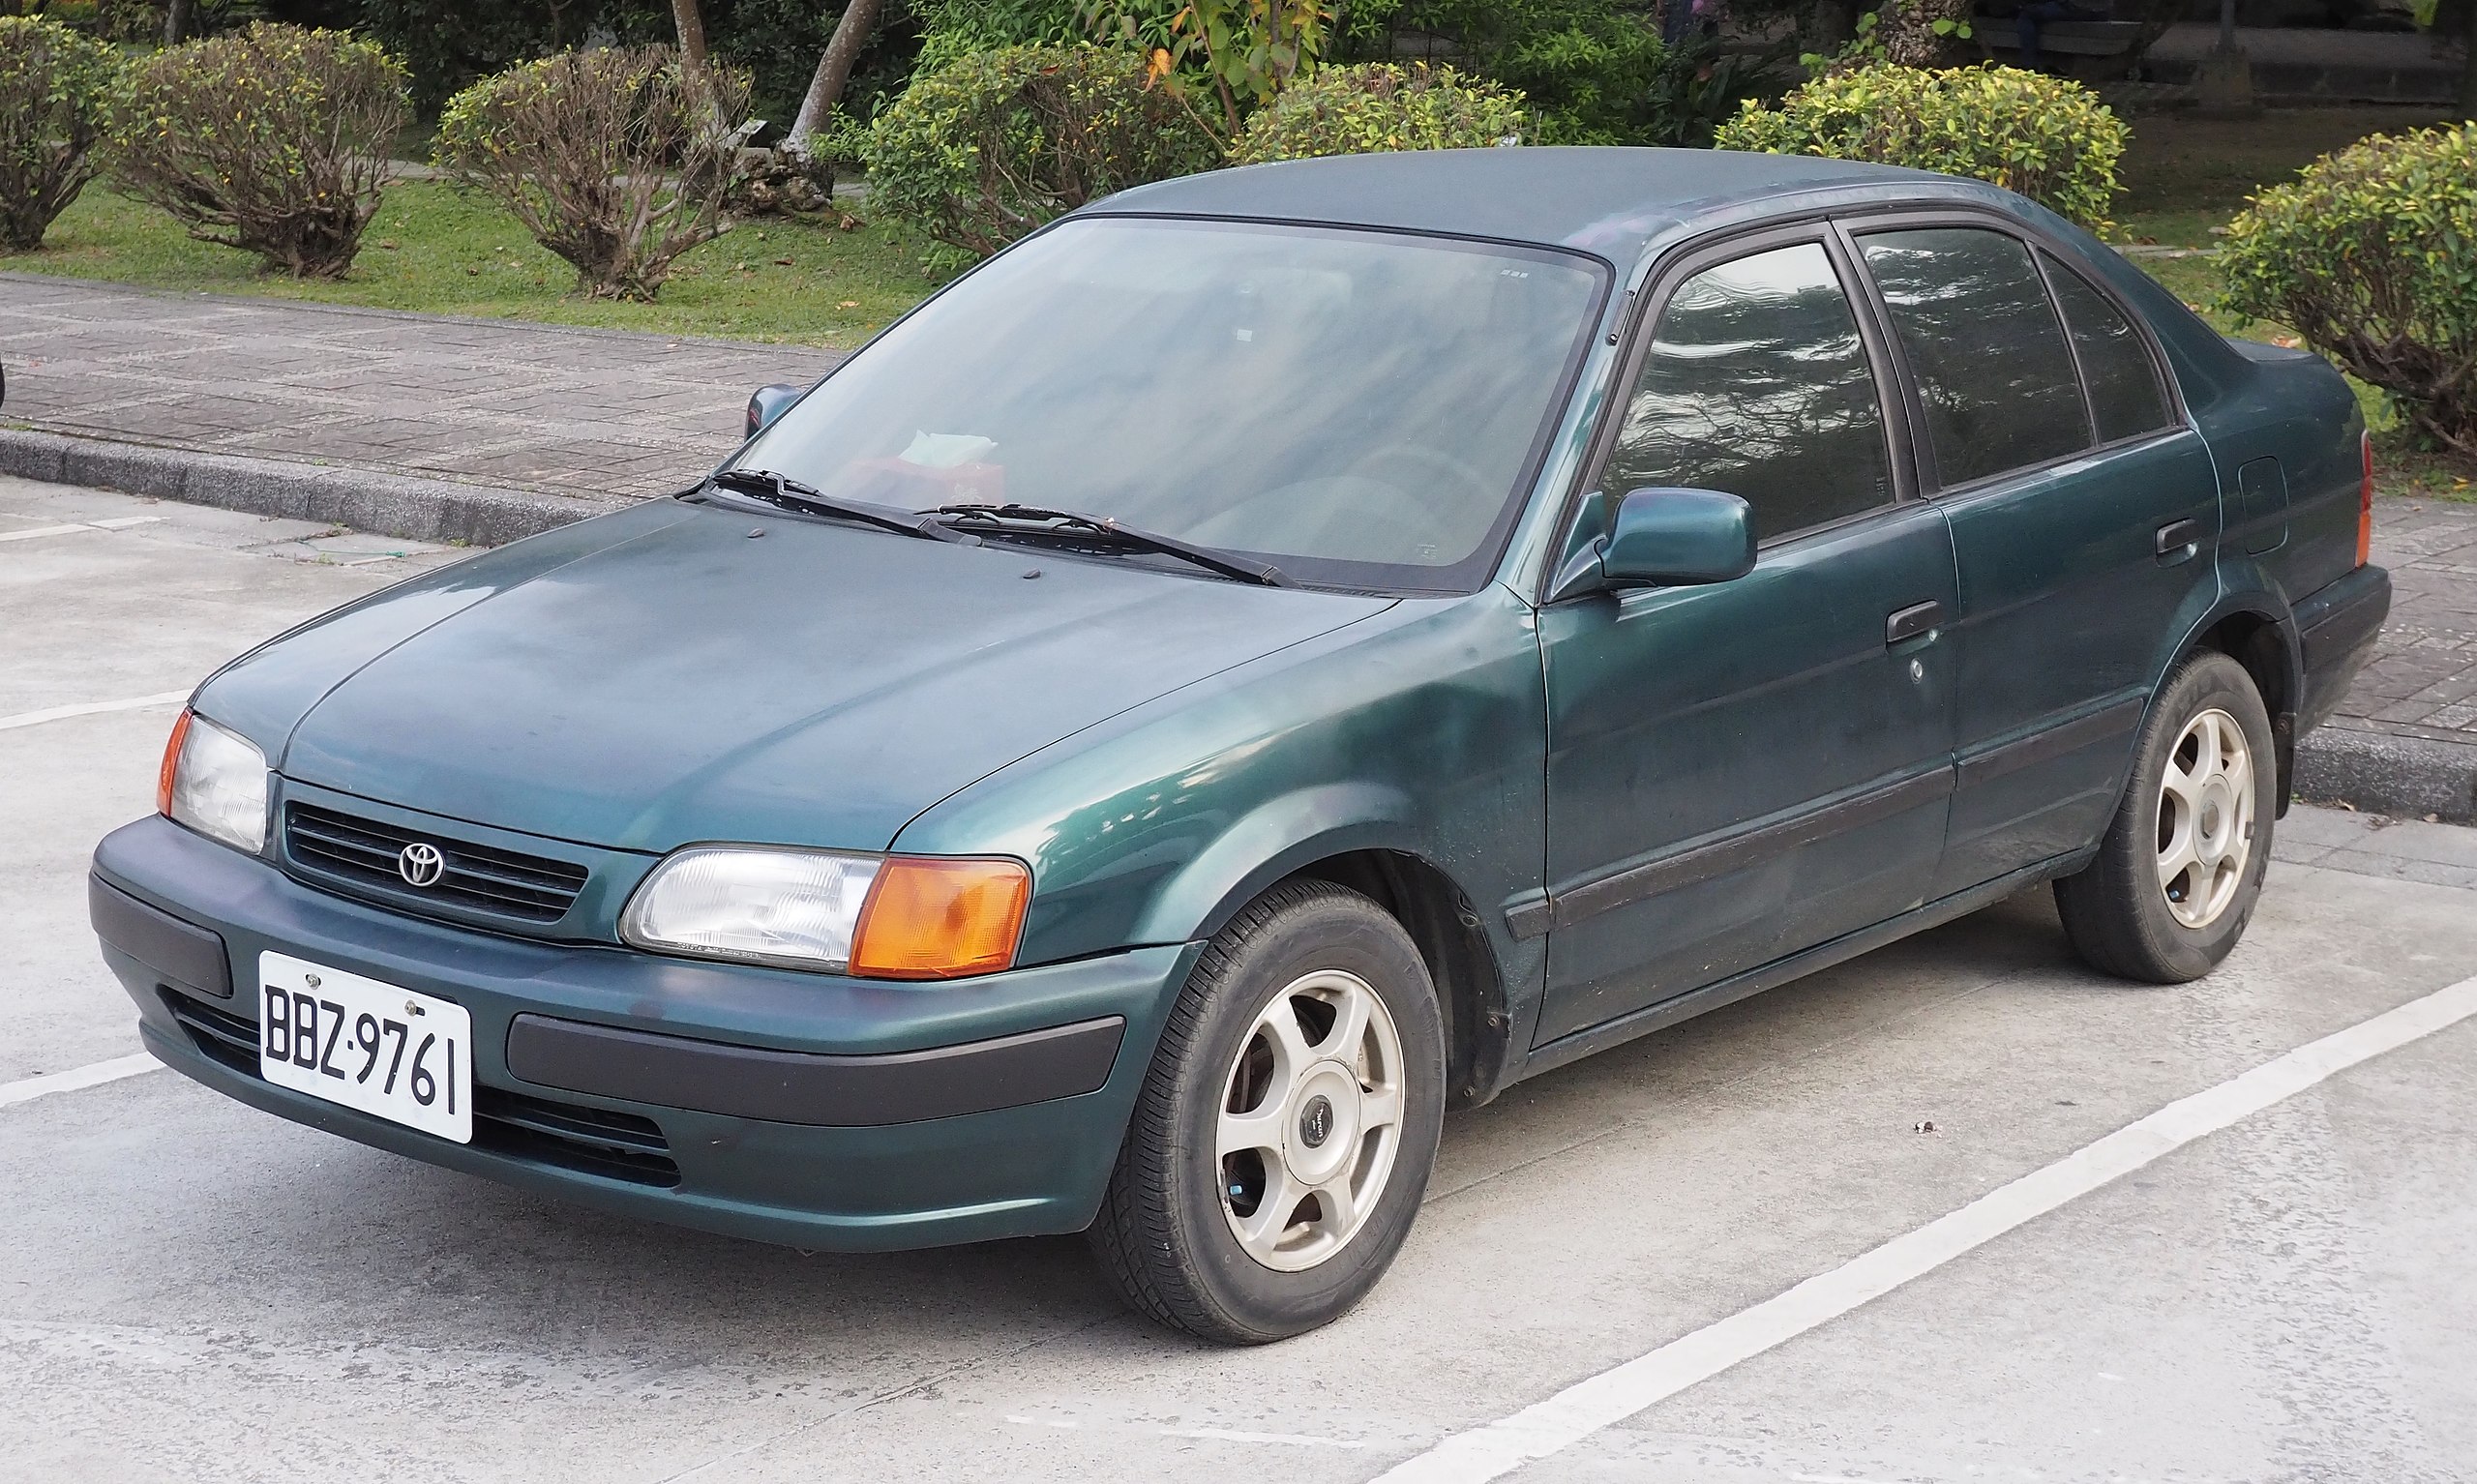 File:1995 Toyota Tercel (front).jpg - Wikimedia Commons